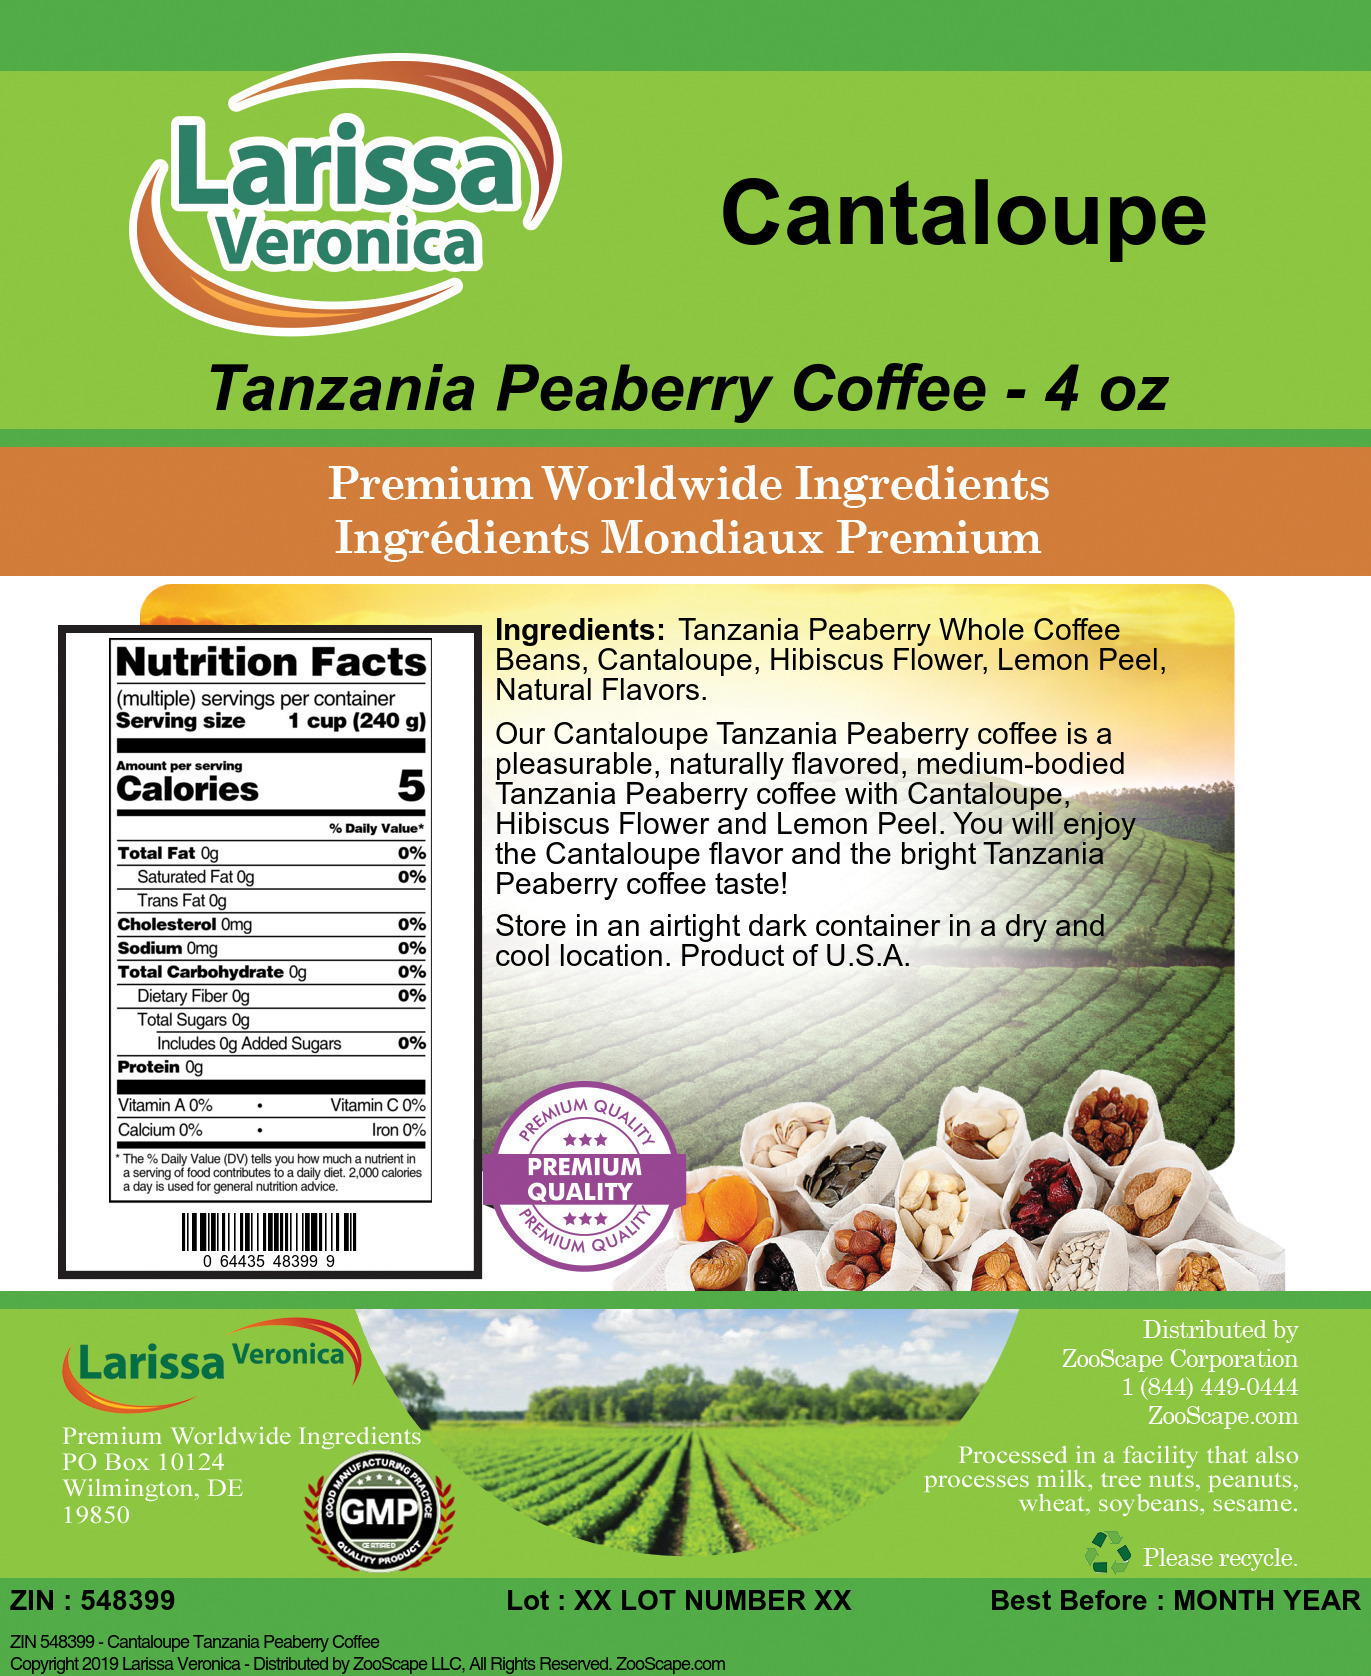 Cantaloupe Tanzania Peaberry Coffee - Label